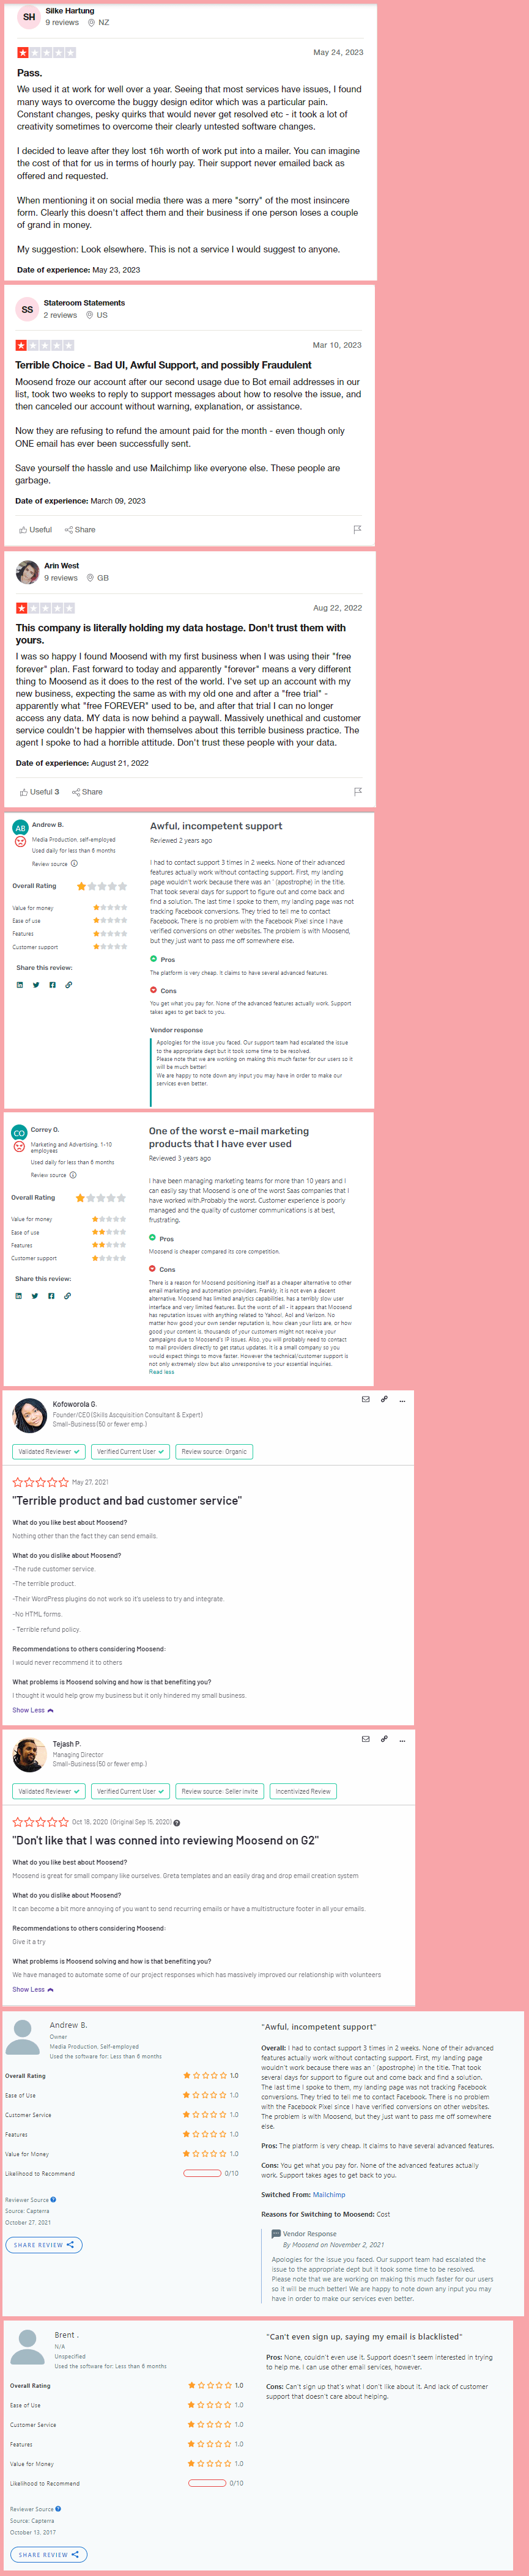 Moosend - Negative User Reviews